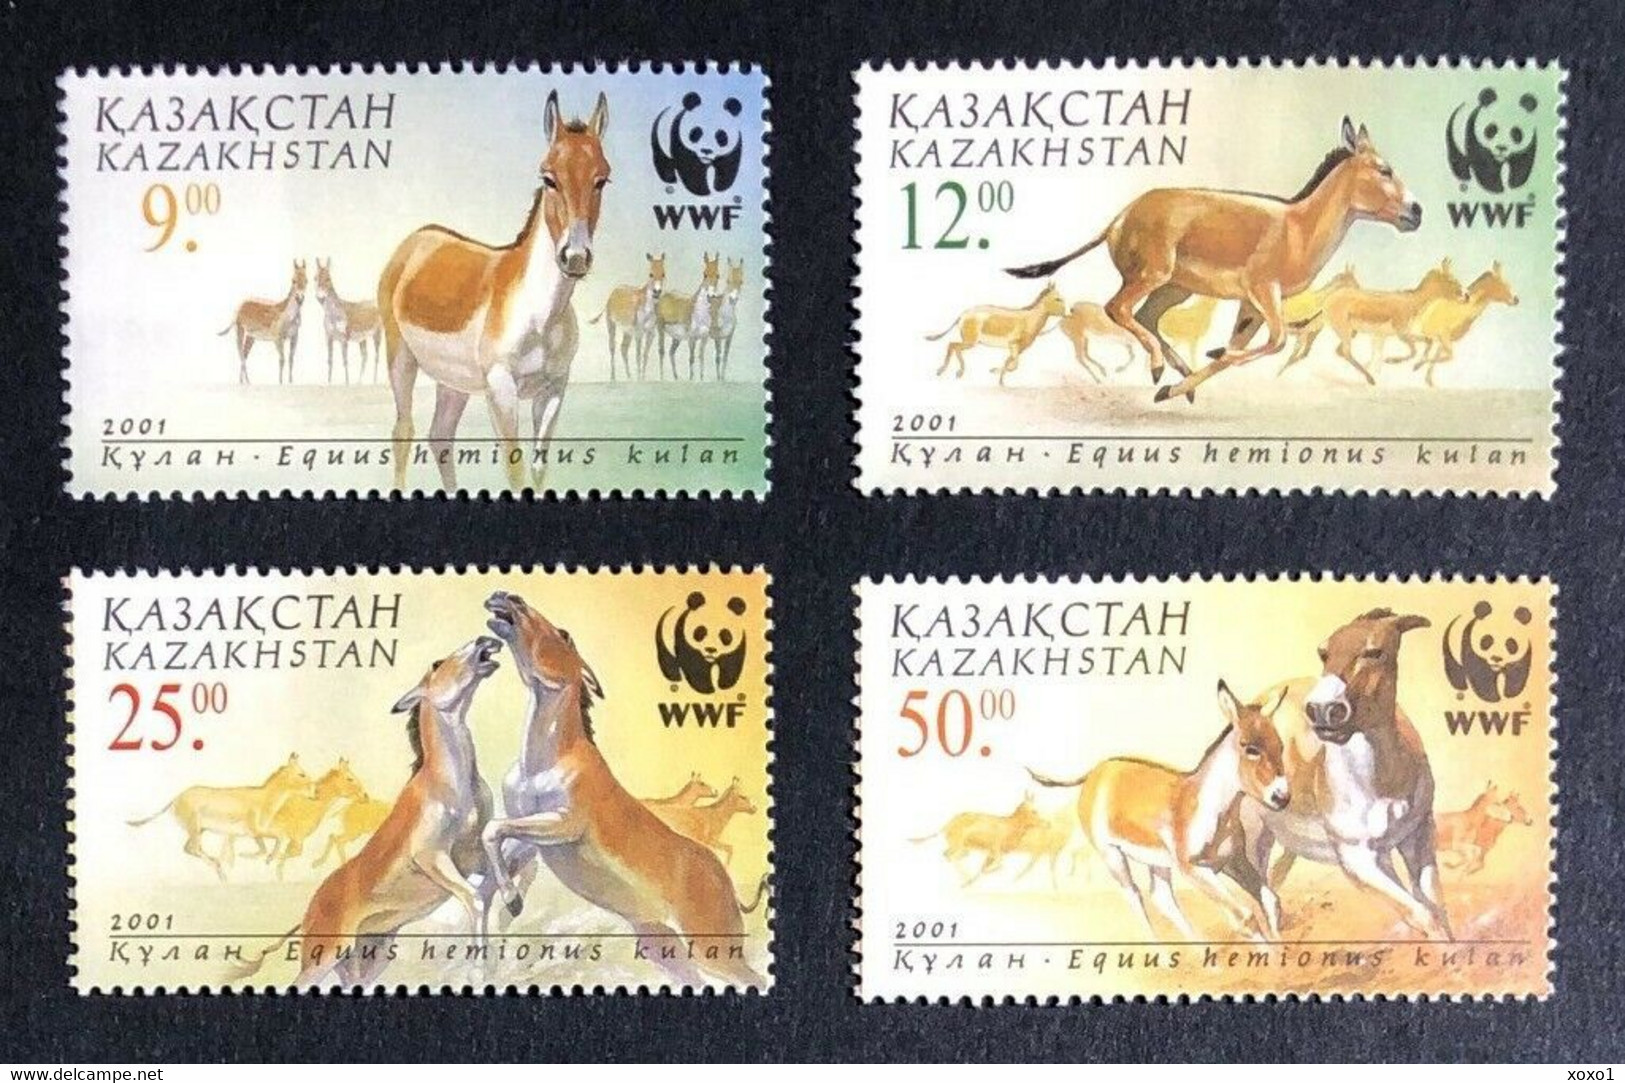 Kazakhstan 1997 MiNr. 345 - 348  Kasachstan  Animals Mammals Onager WWF 4v MNH** 5.00 € - Ezels